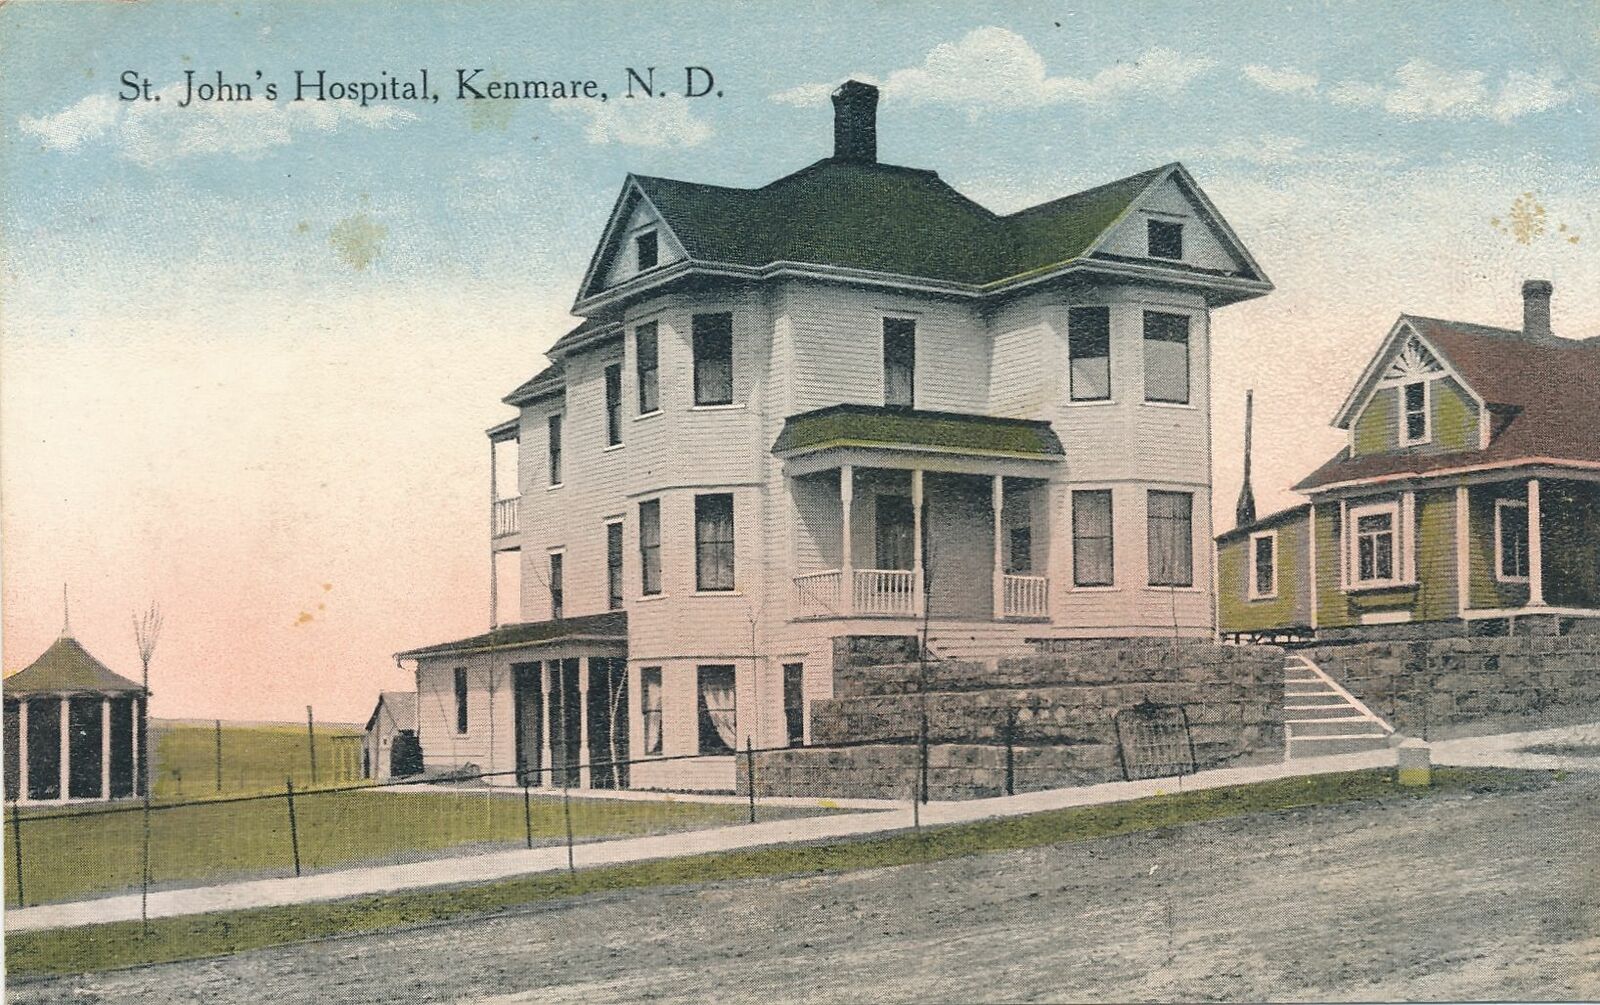 KENMARE ND - St. John's Hospital